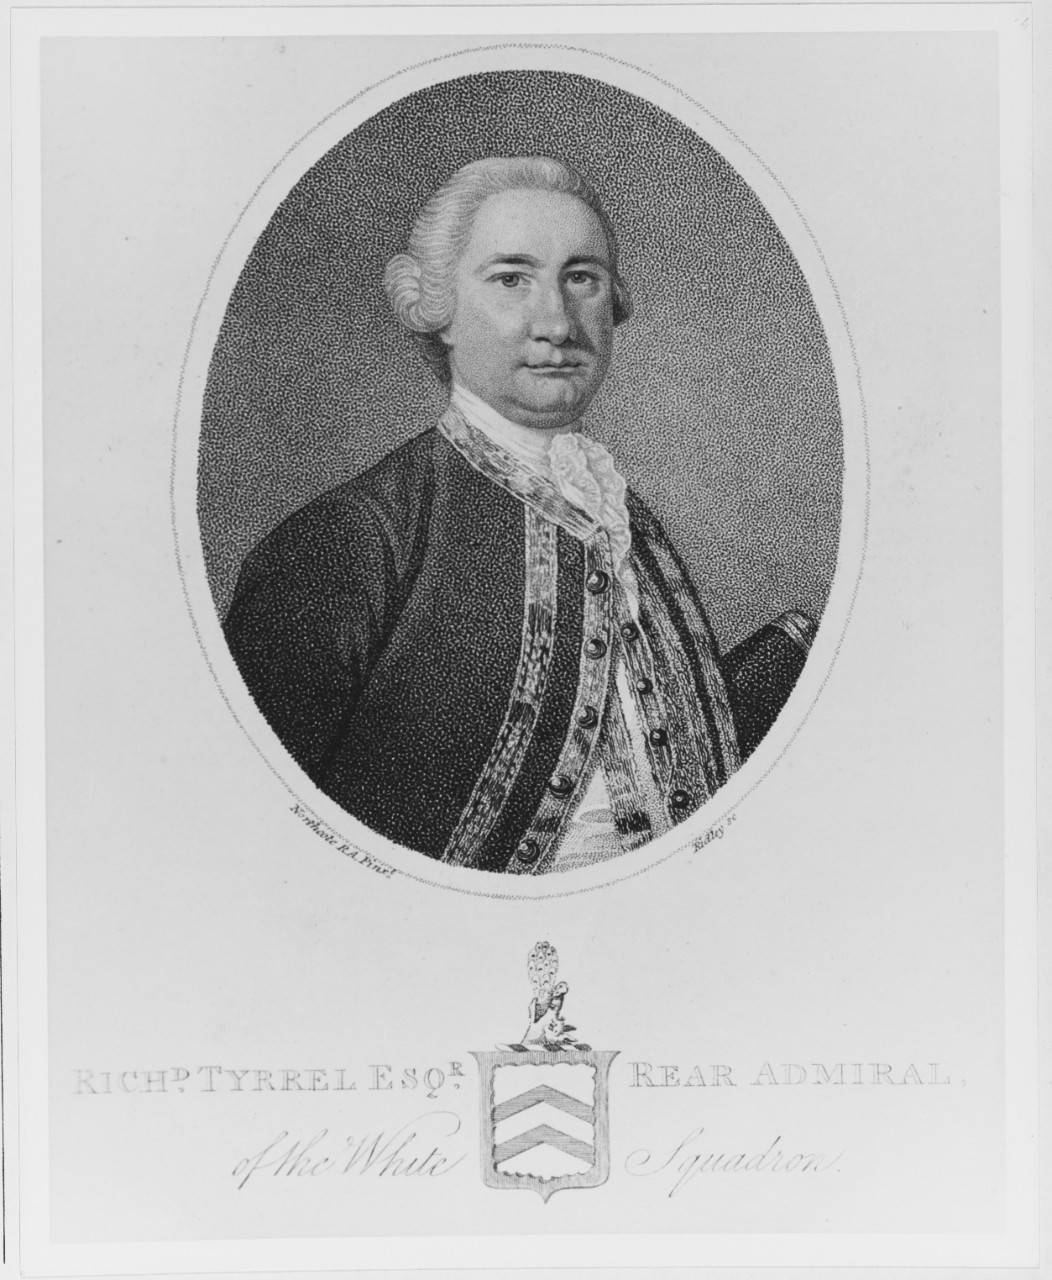 Richard Tyrrel (circa 1716-1766), Rear Admiral, Royal Navy